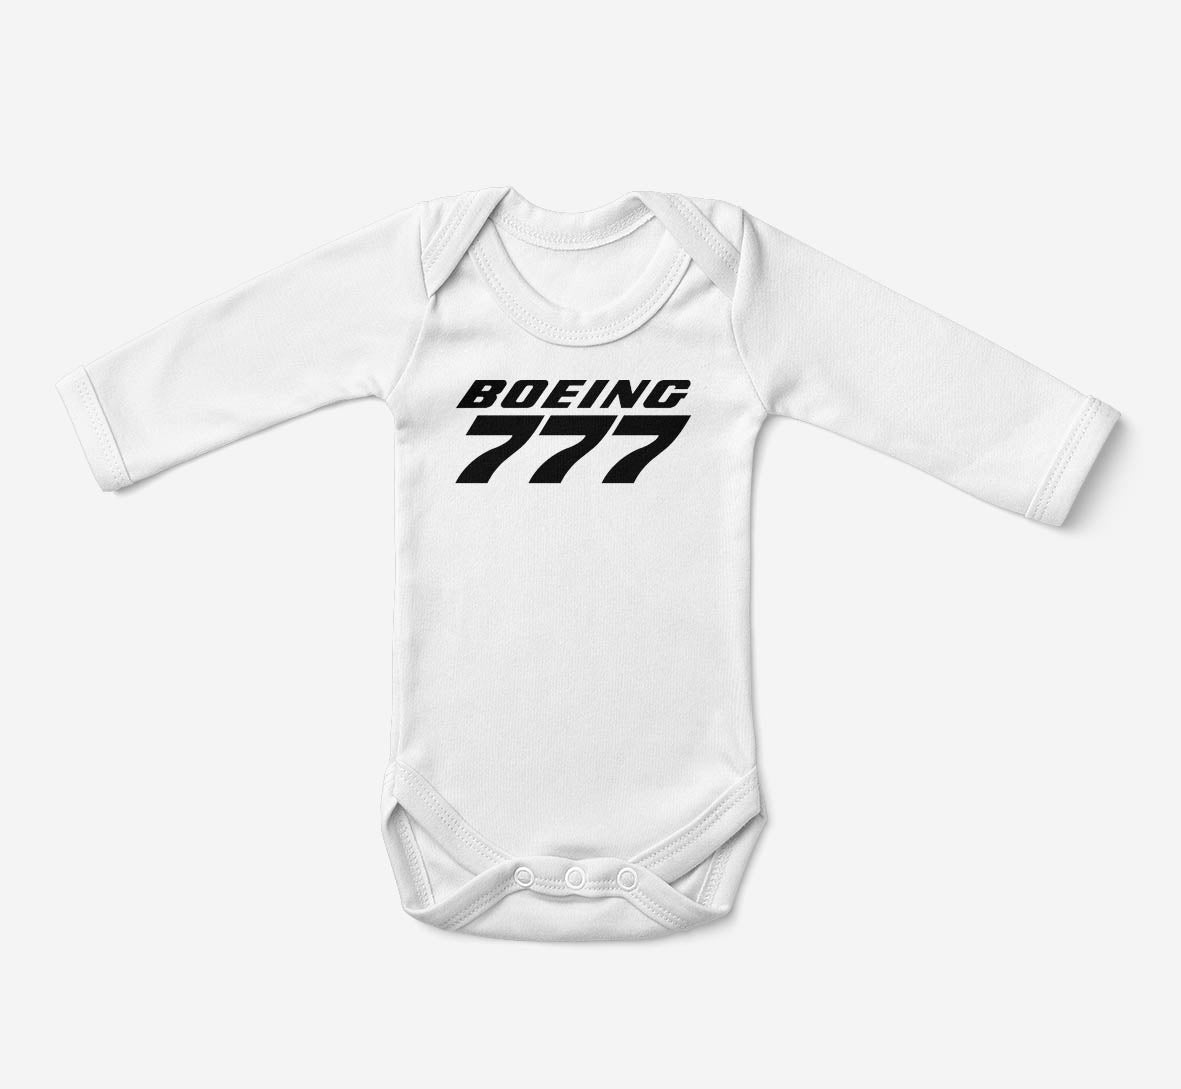 Boeing 777 & Text Designed Baby Bodysuits